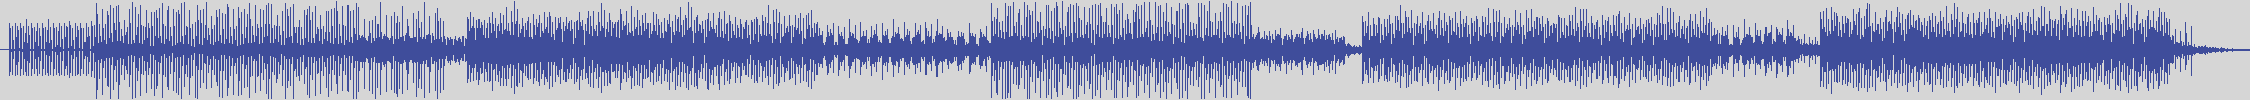 nf_boyz_records [NFY073] Pulpy Antidote - Zodiac Hair [Original Mix] audio wave form